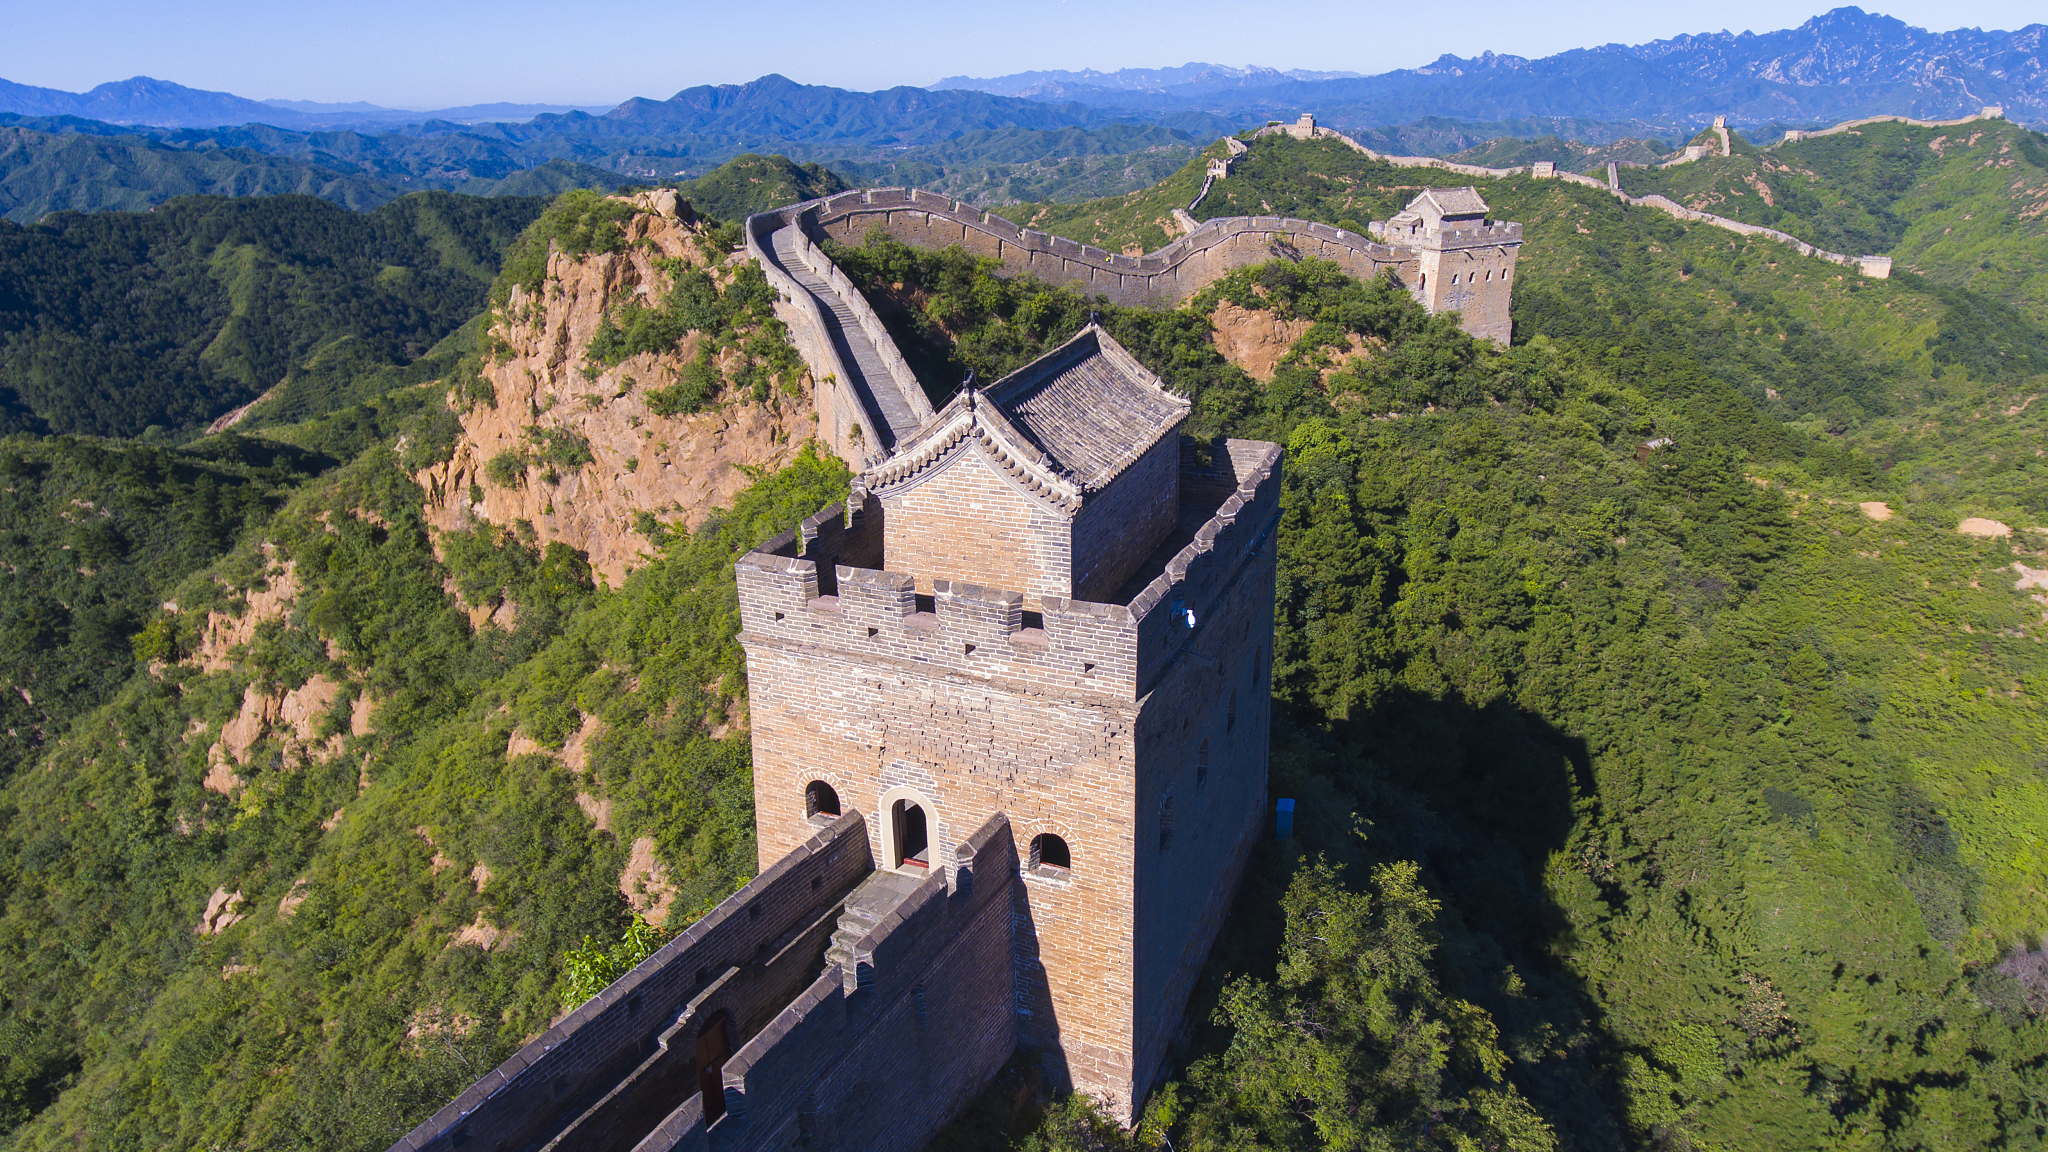 Live: Jinshanling Great Wall reveals its true splendor in summer – Ep. 4